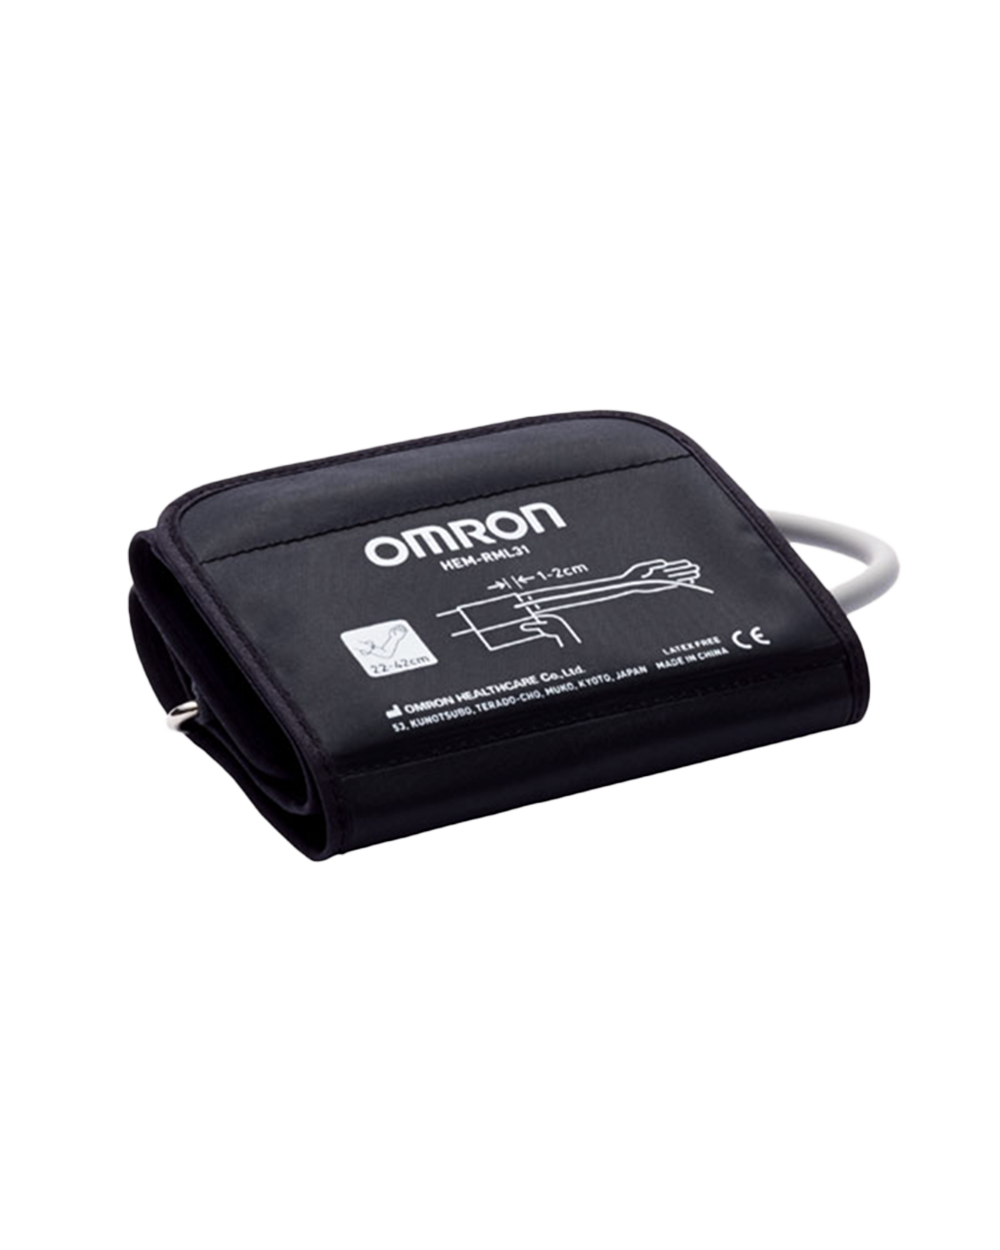 Omron BP7100 3 Series Upper Arm Blood Pressure Monitor & CD-WR17  Advanced-Accuracy Series Wide-Range D-Ring Cuff - Walmart.com